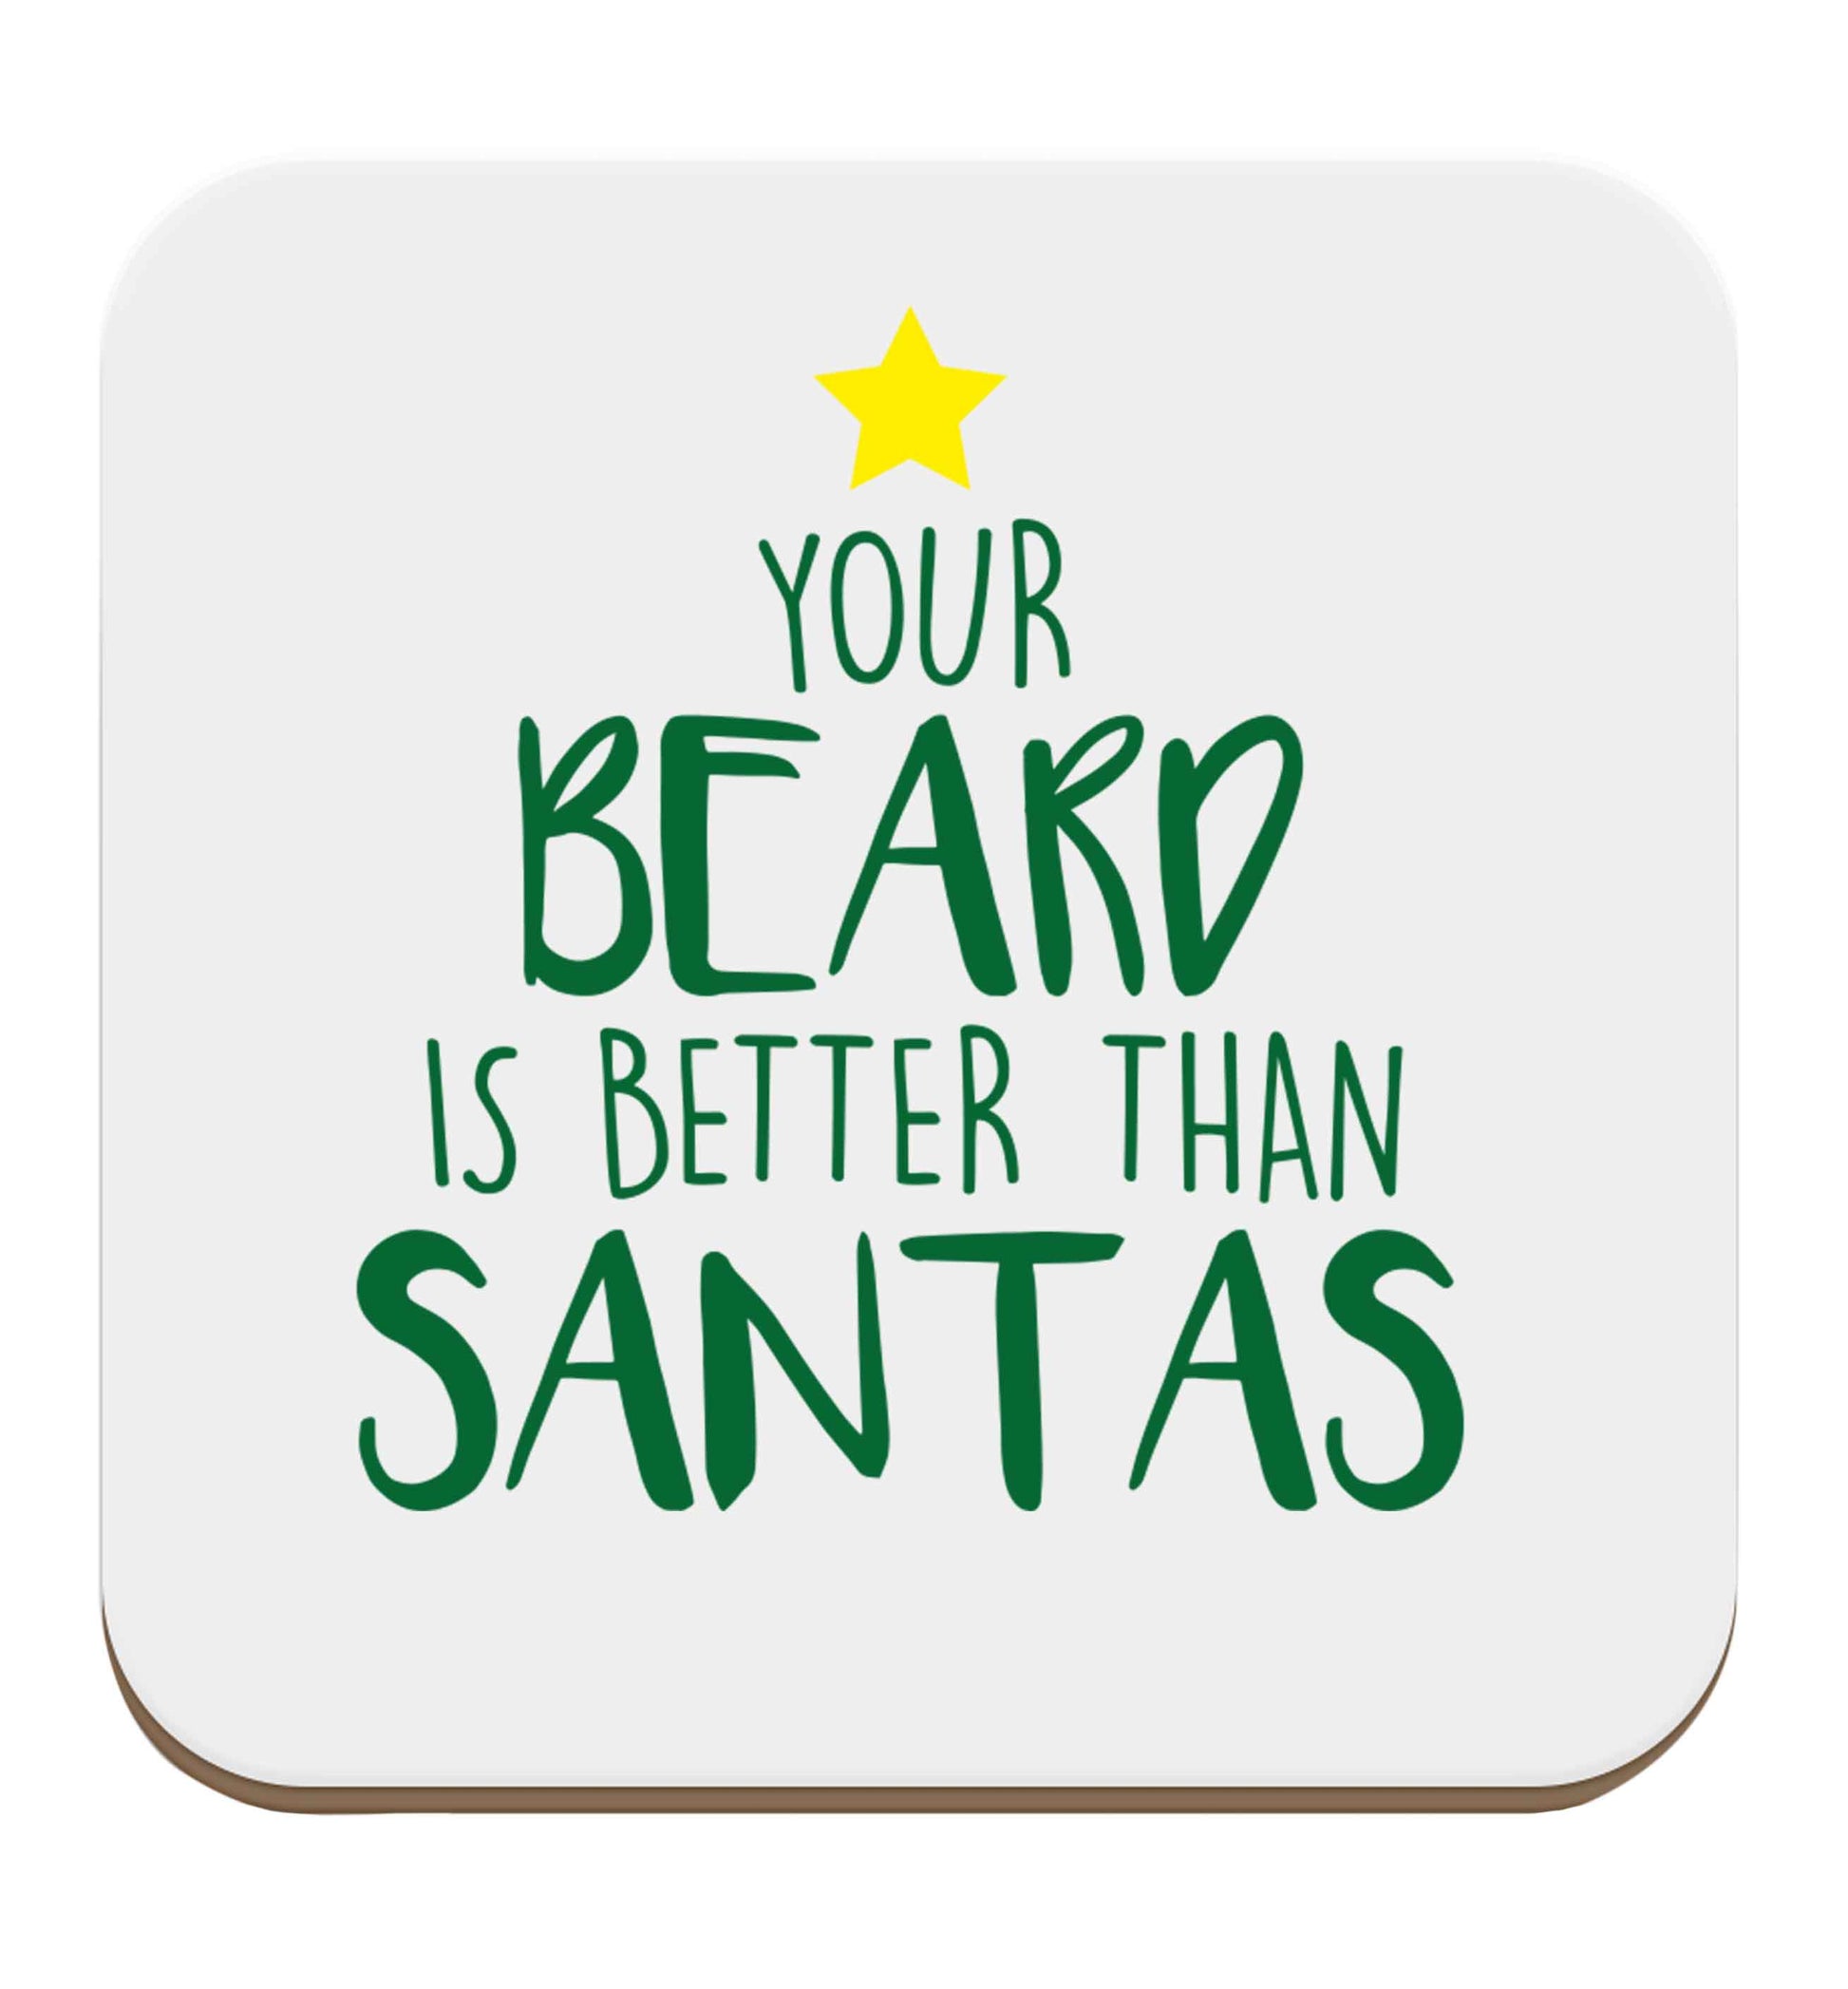 Your Beard Better than Santas set of four coasters